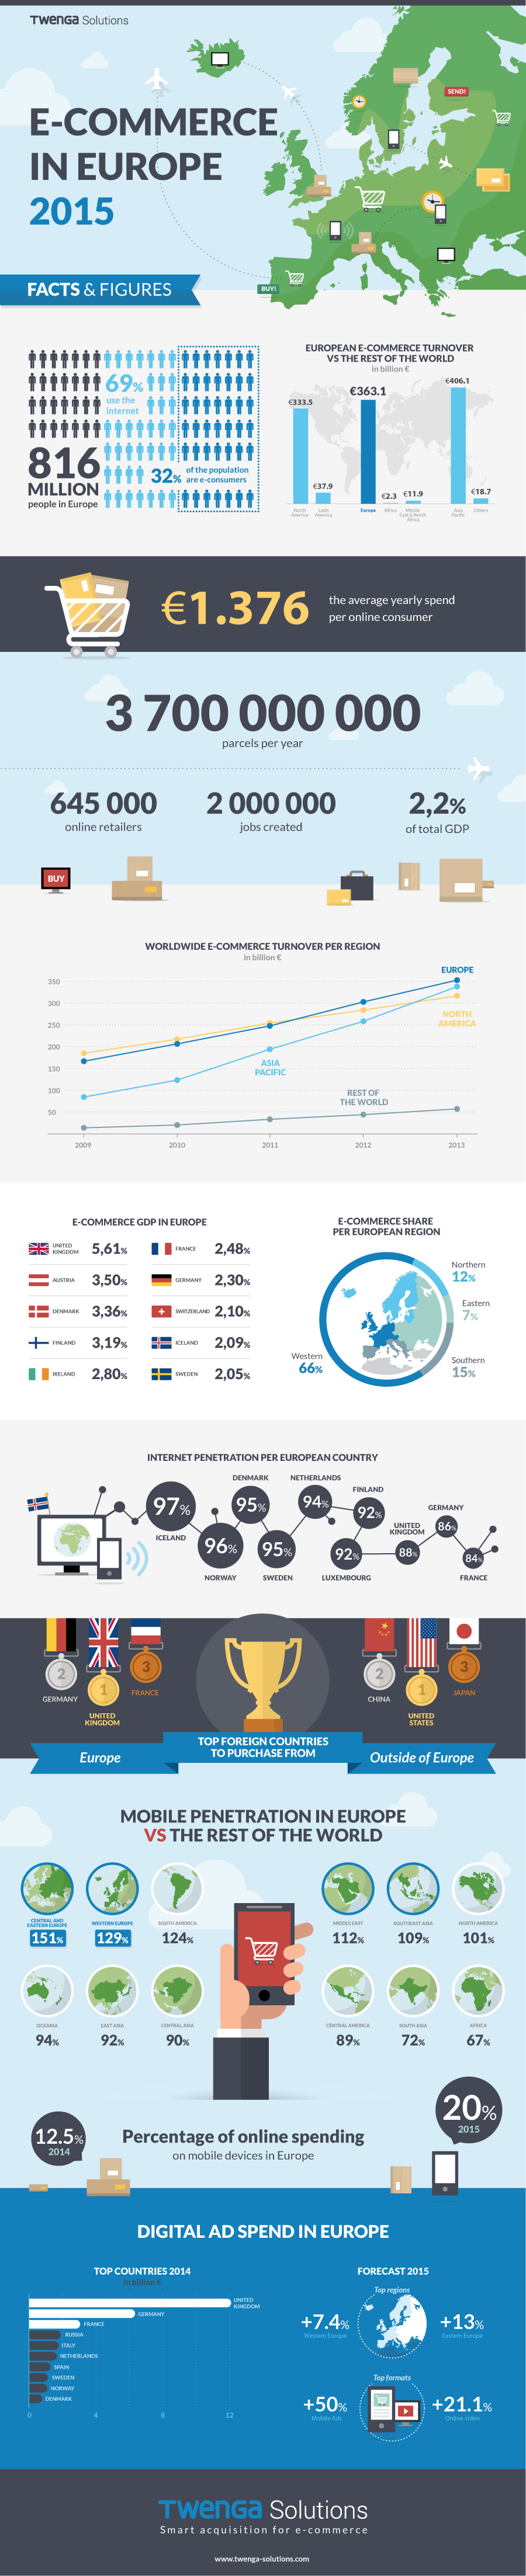 infographic-ecommerce-europe-2015